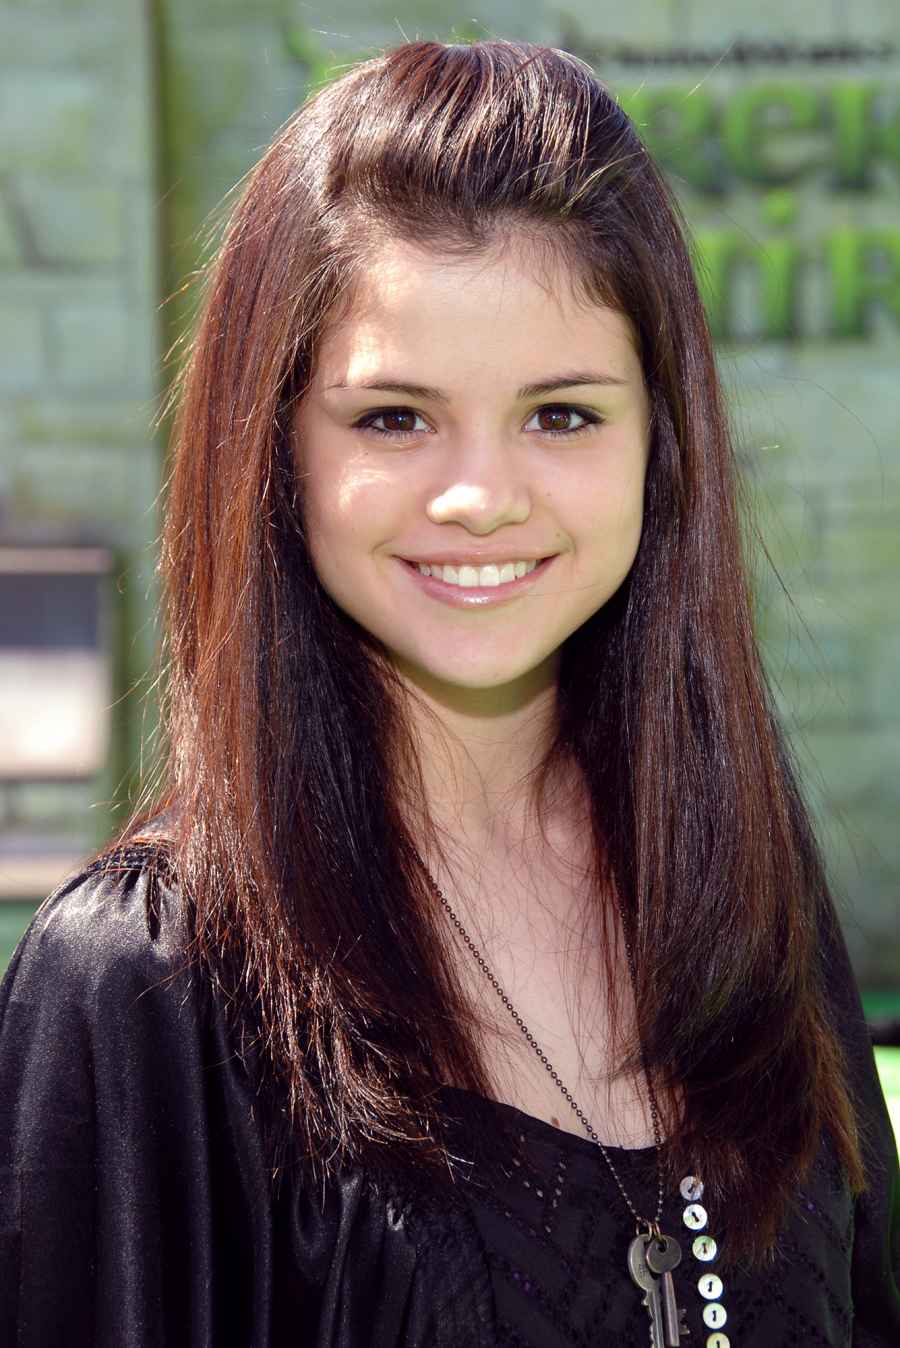 Selena Gomez Through the Years